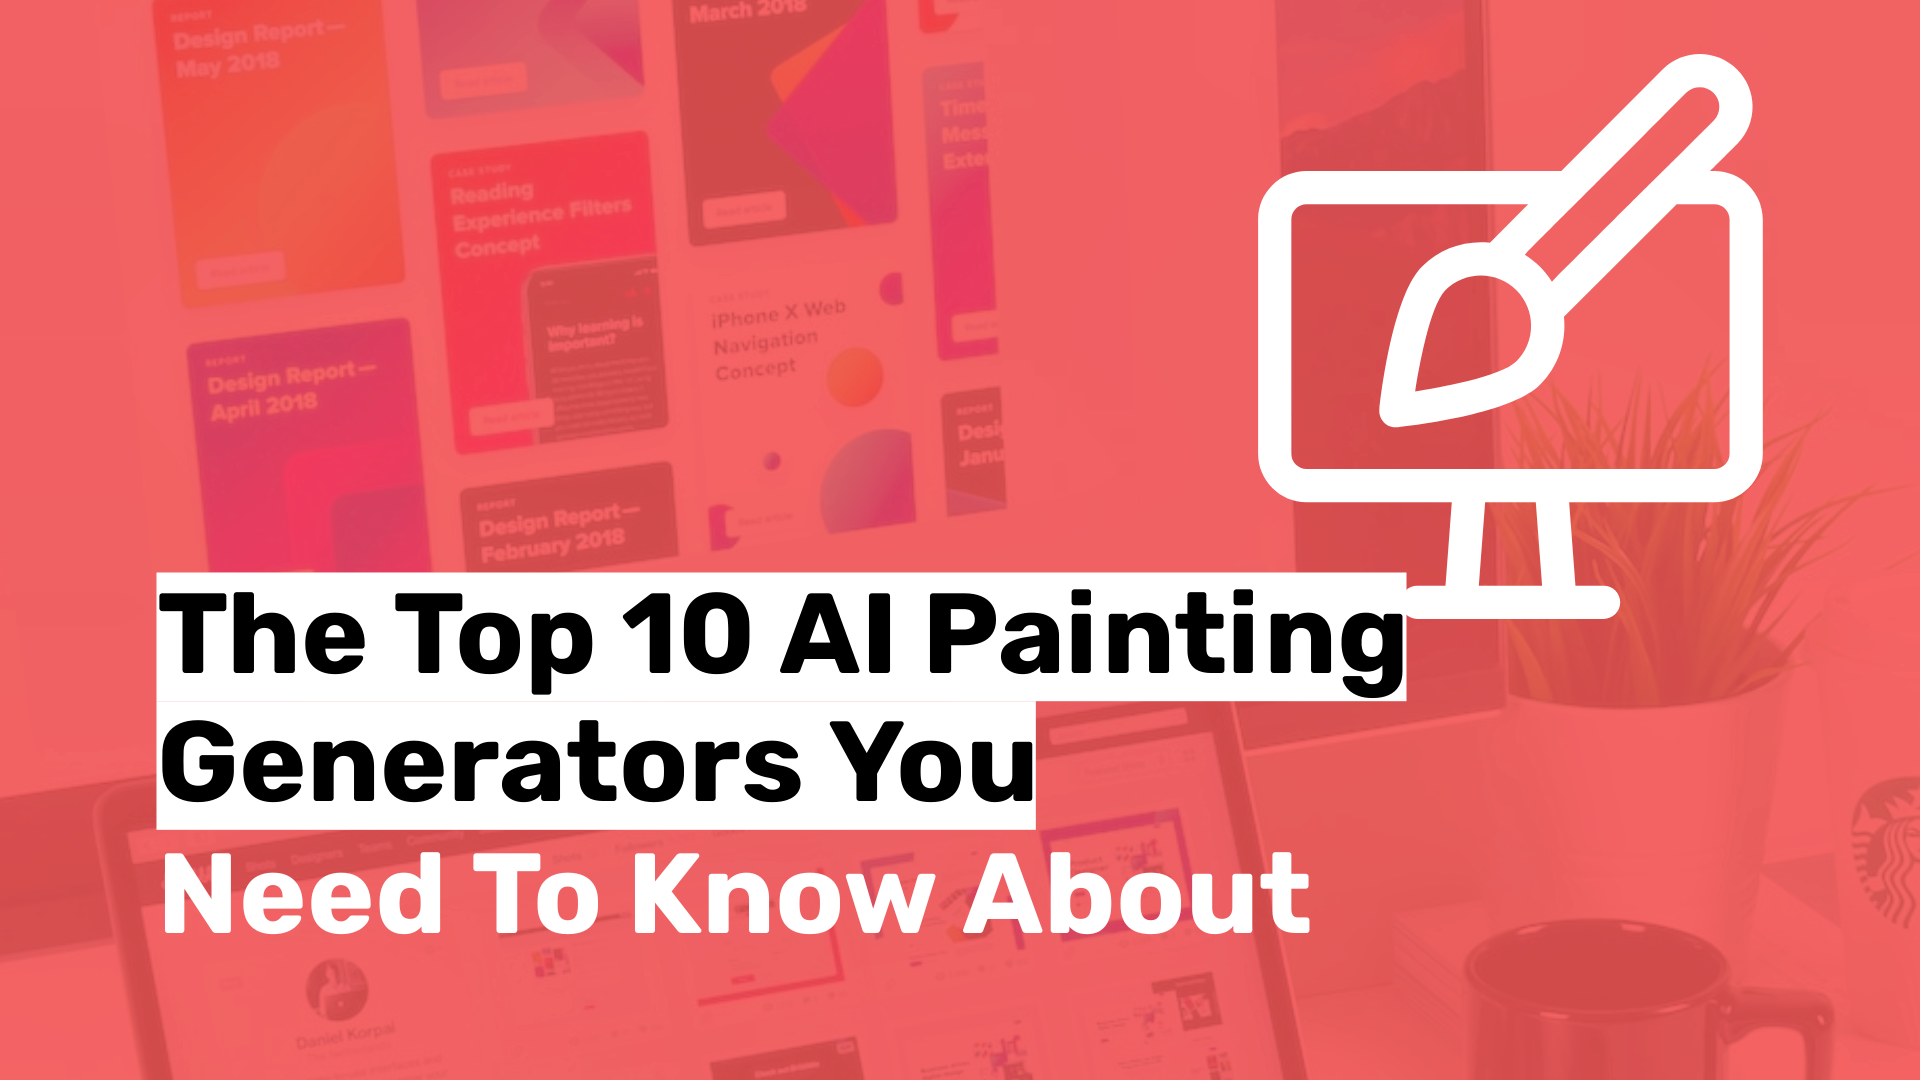 Top 10 AI Painting Generators